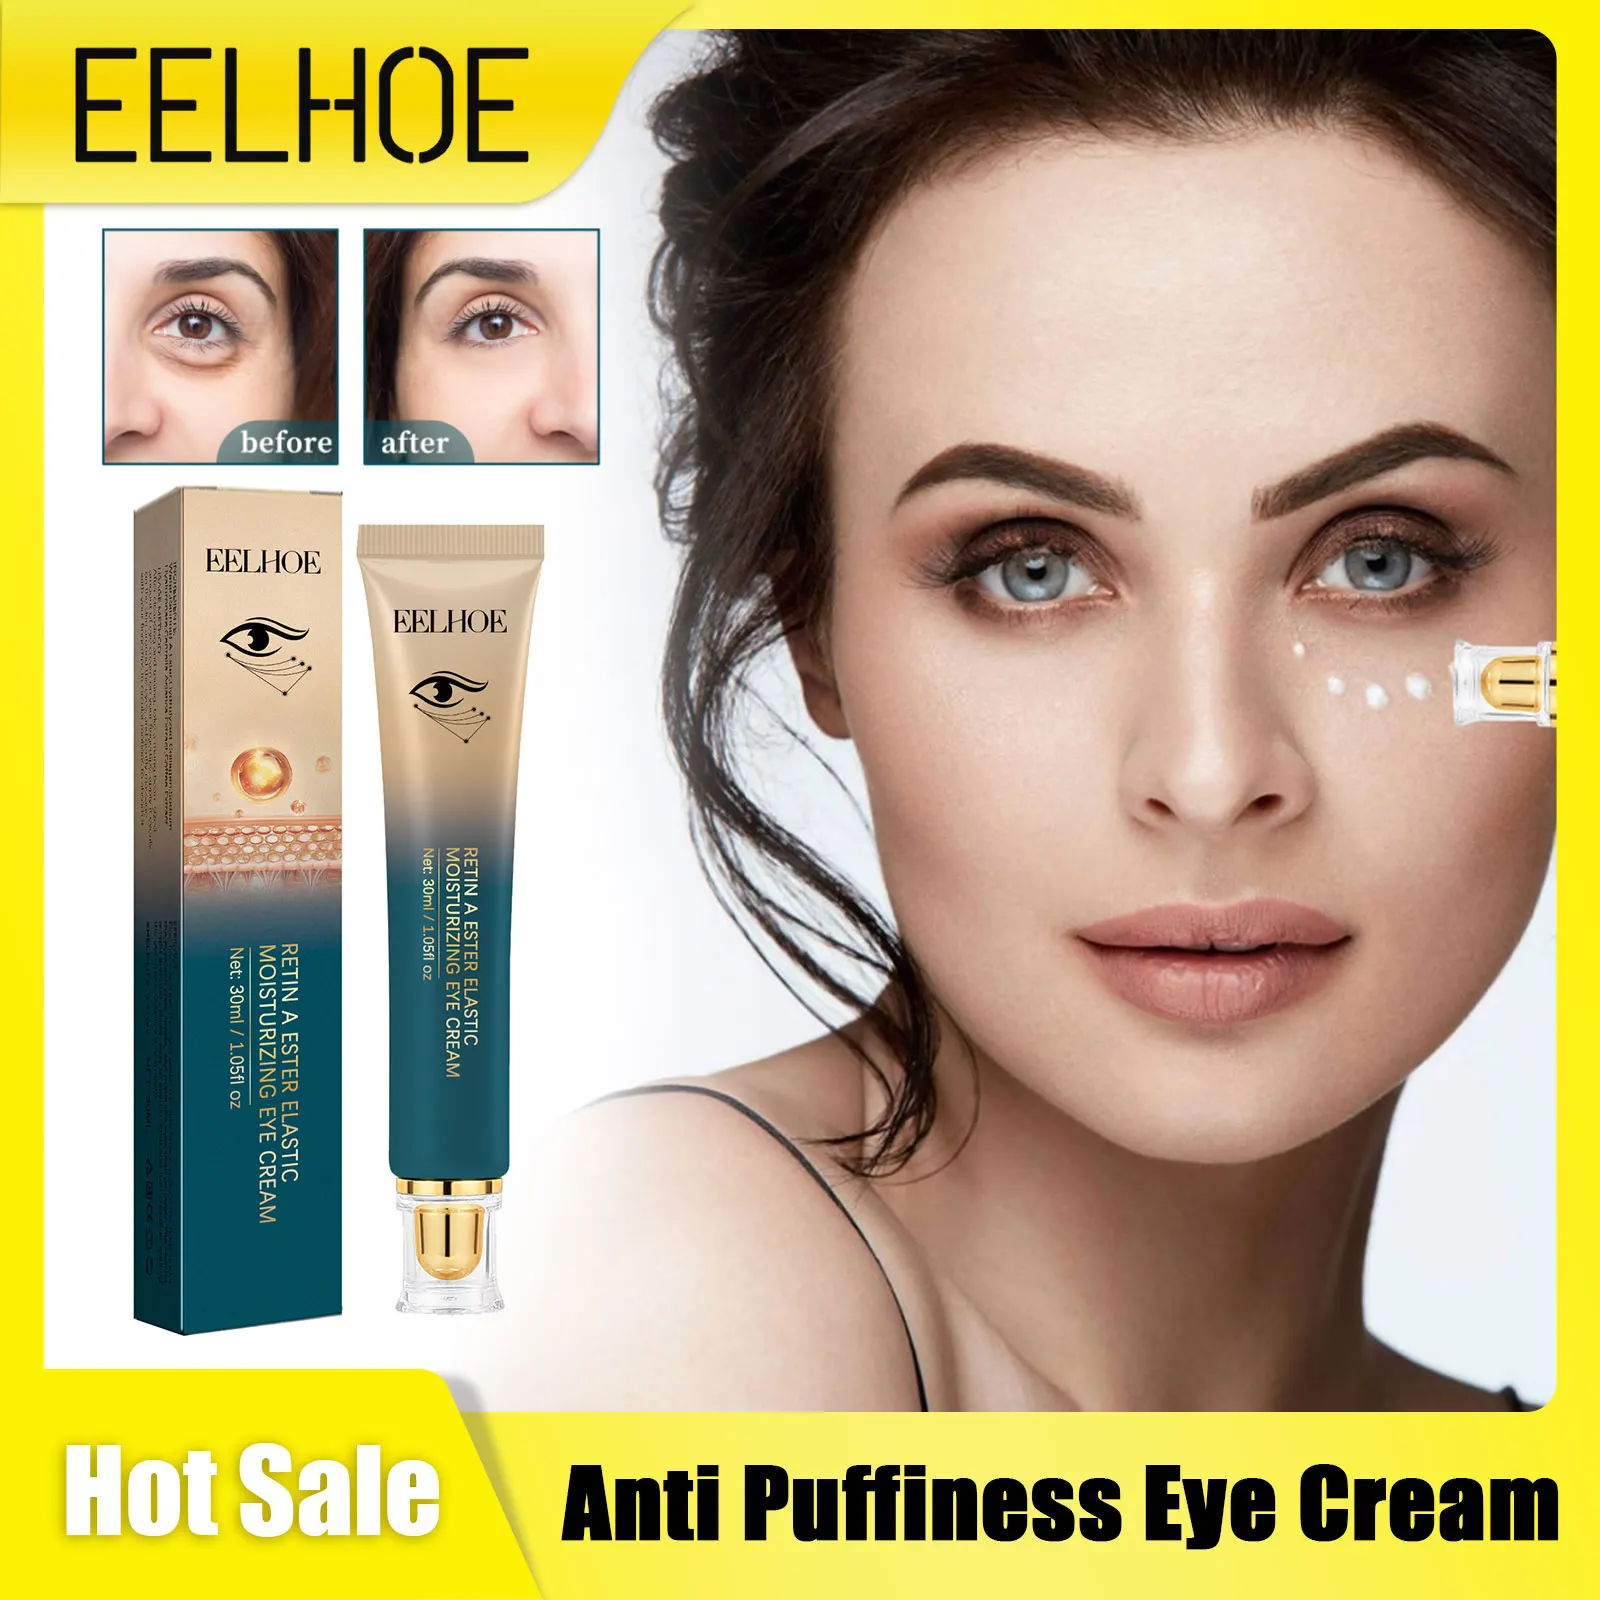 Anti Puffiness Eye Cream Anti Aging Reduce Dark Circles Fade Fine Lines Remove Eye Bags Firming Skin Wrinkles Removal Eye Cream